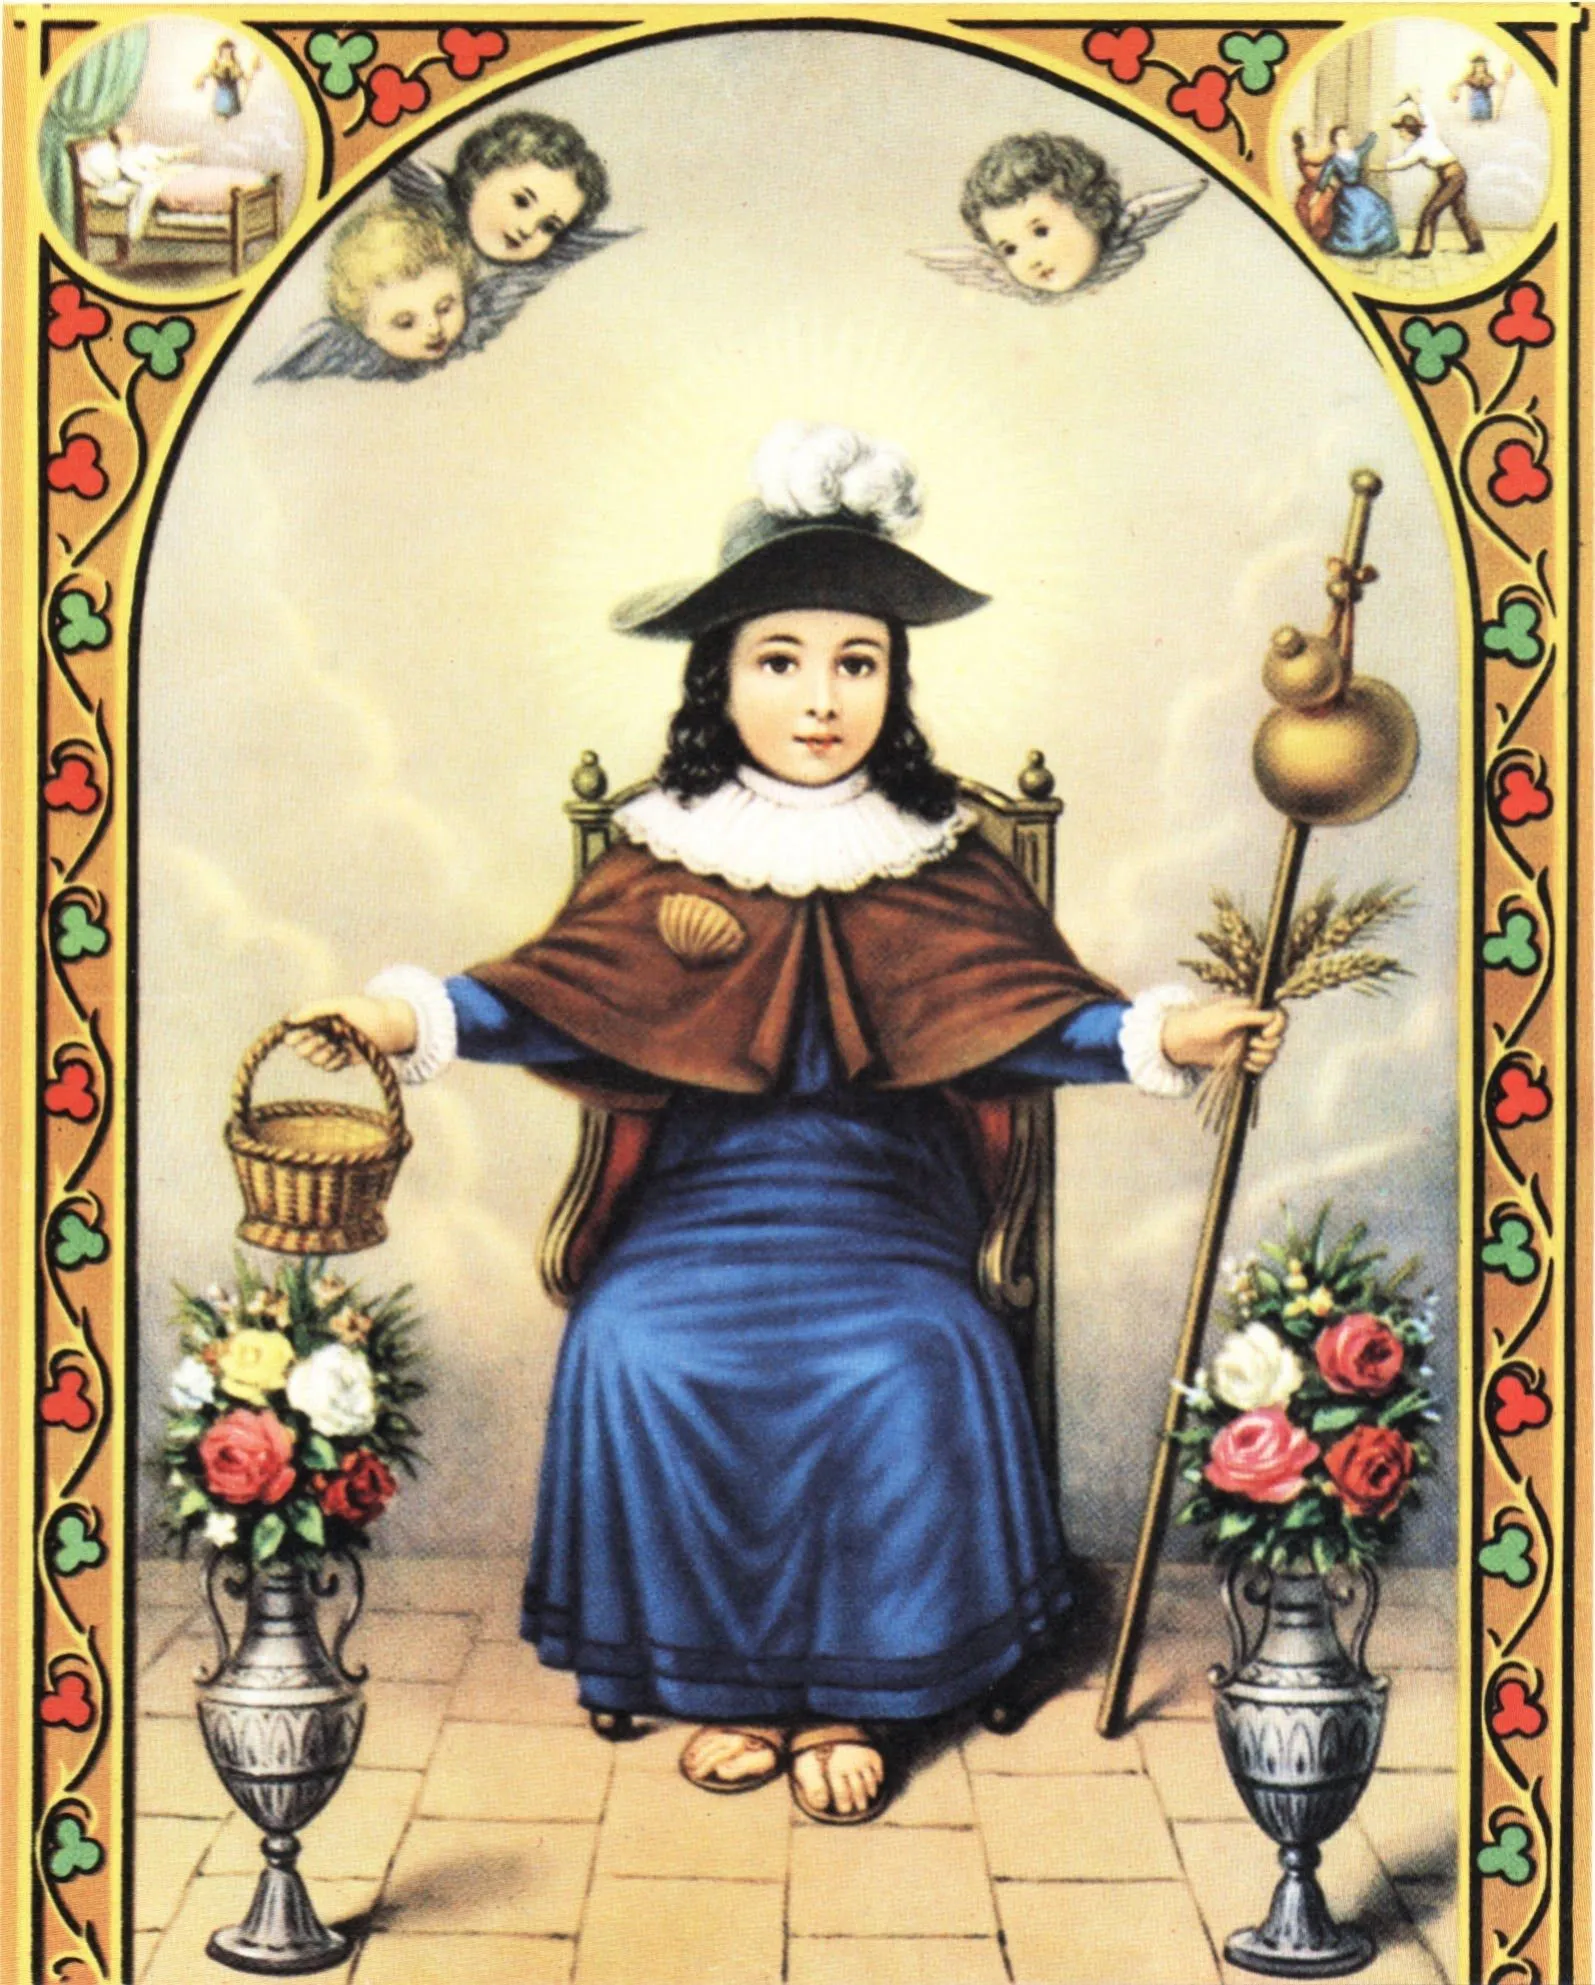 The Catholic Prayer to the Holy Child of Atocha